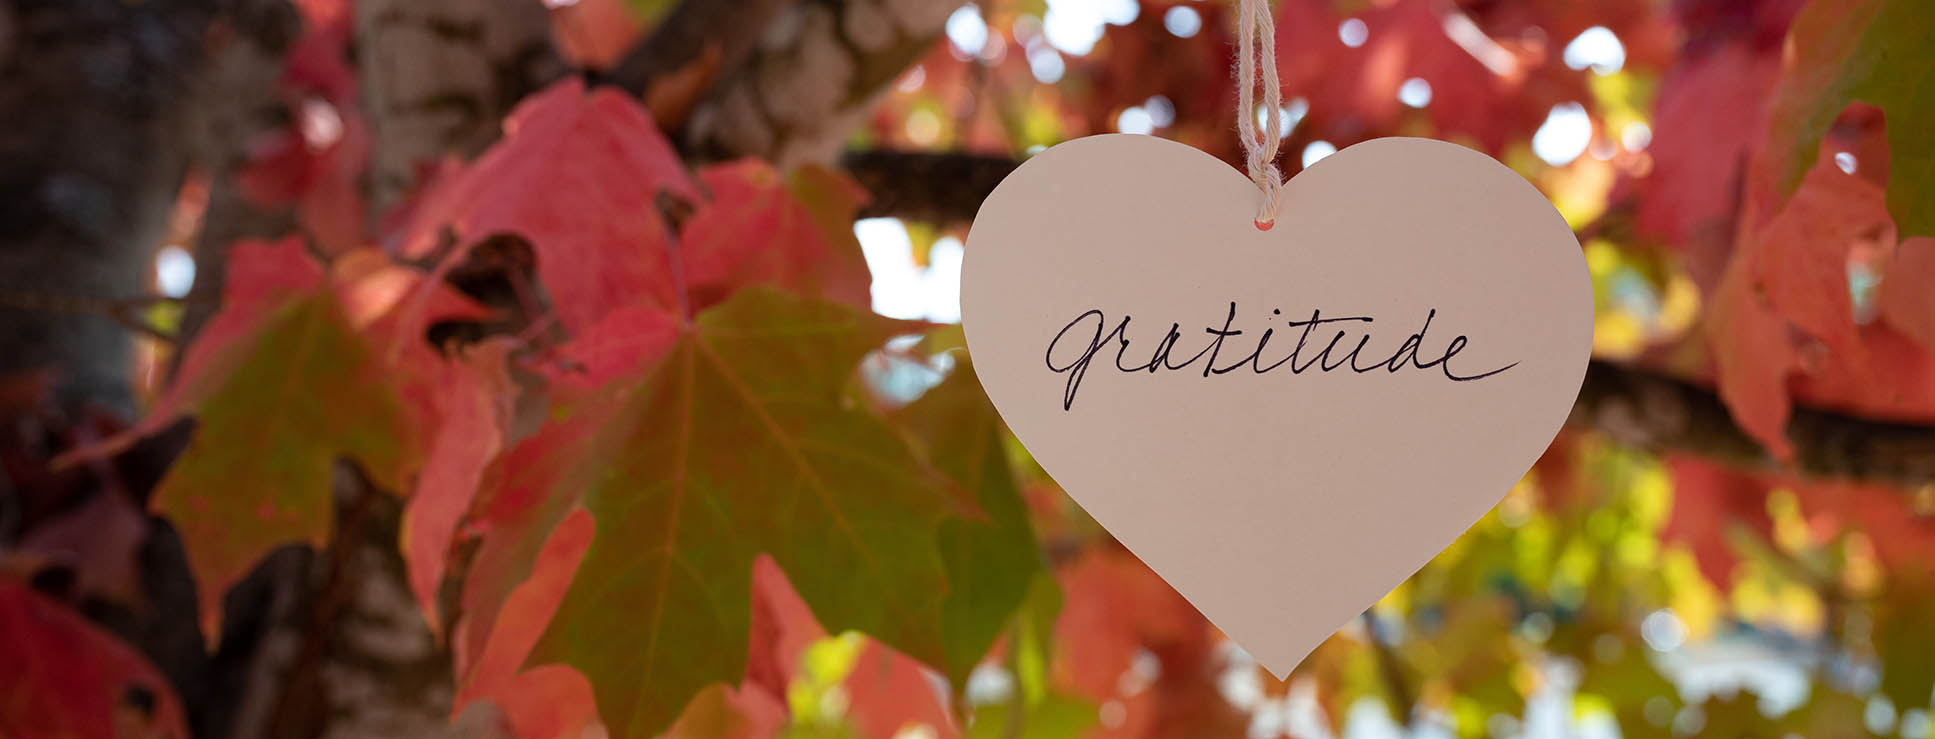 Gratitude Heart in Fall Tree Leaves